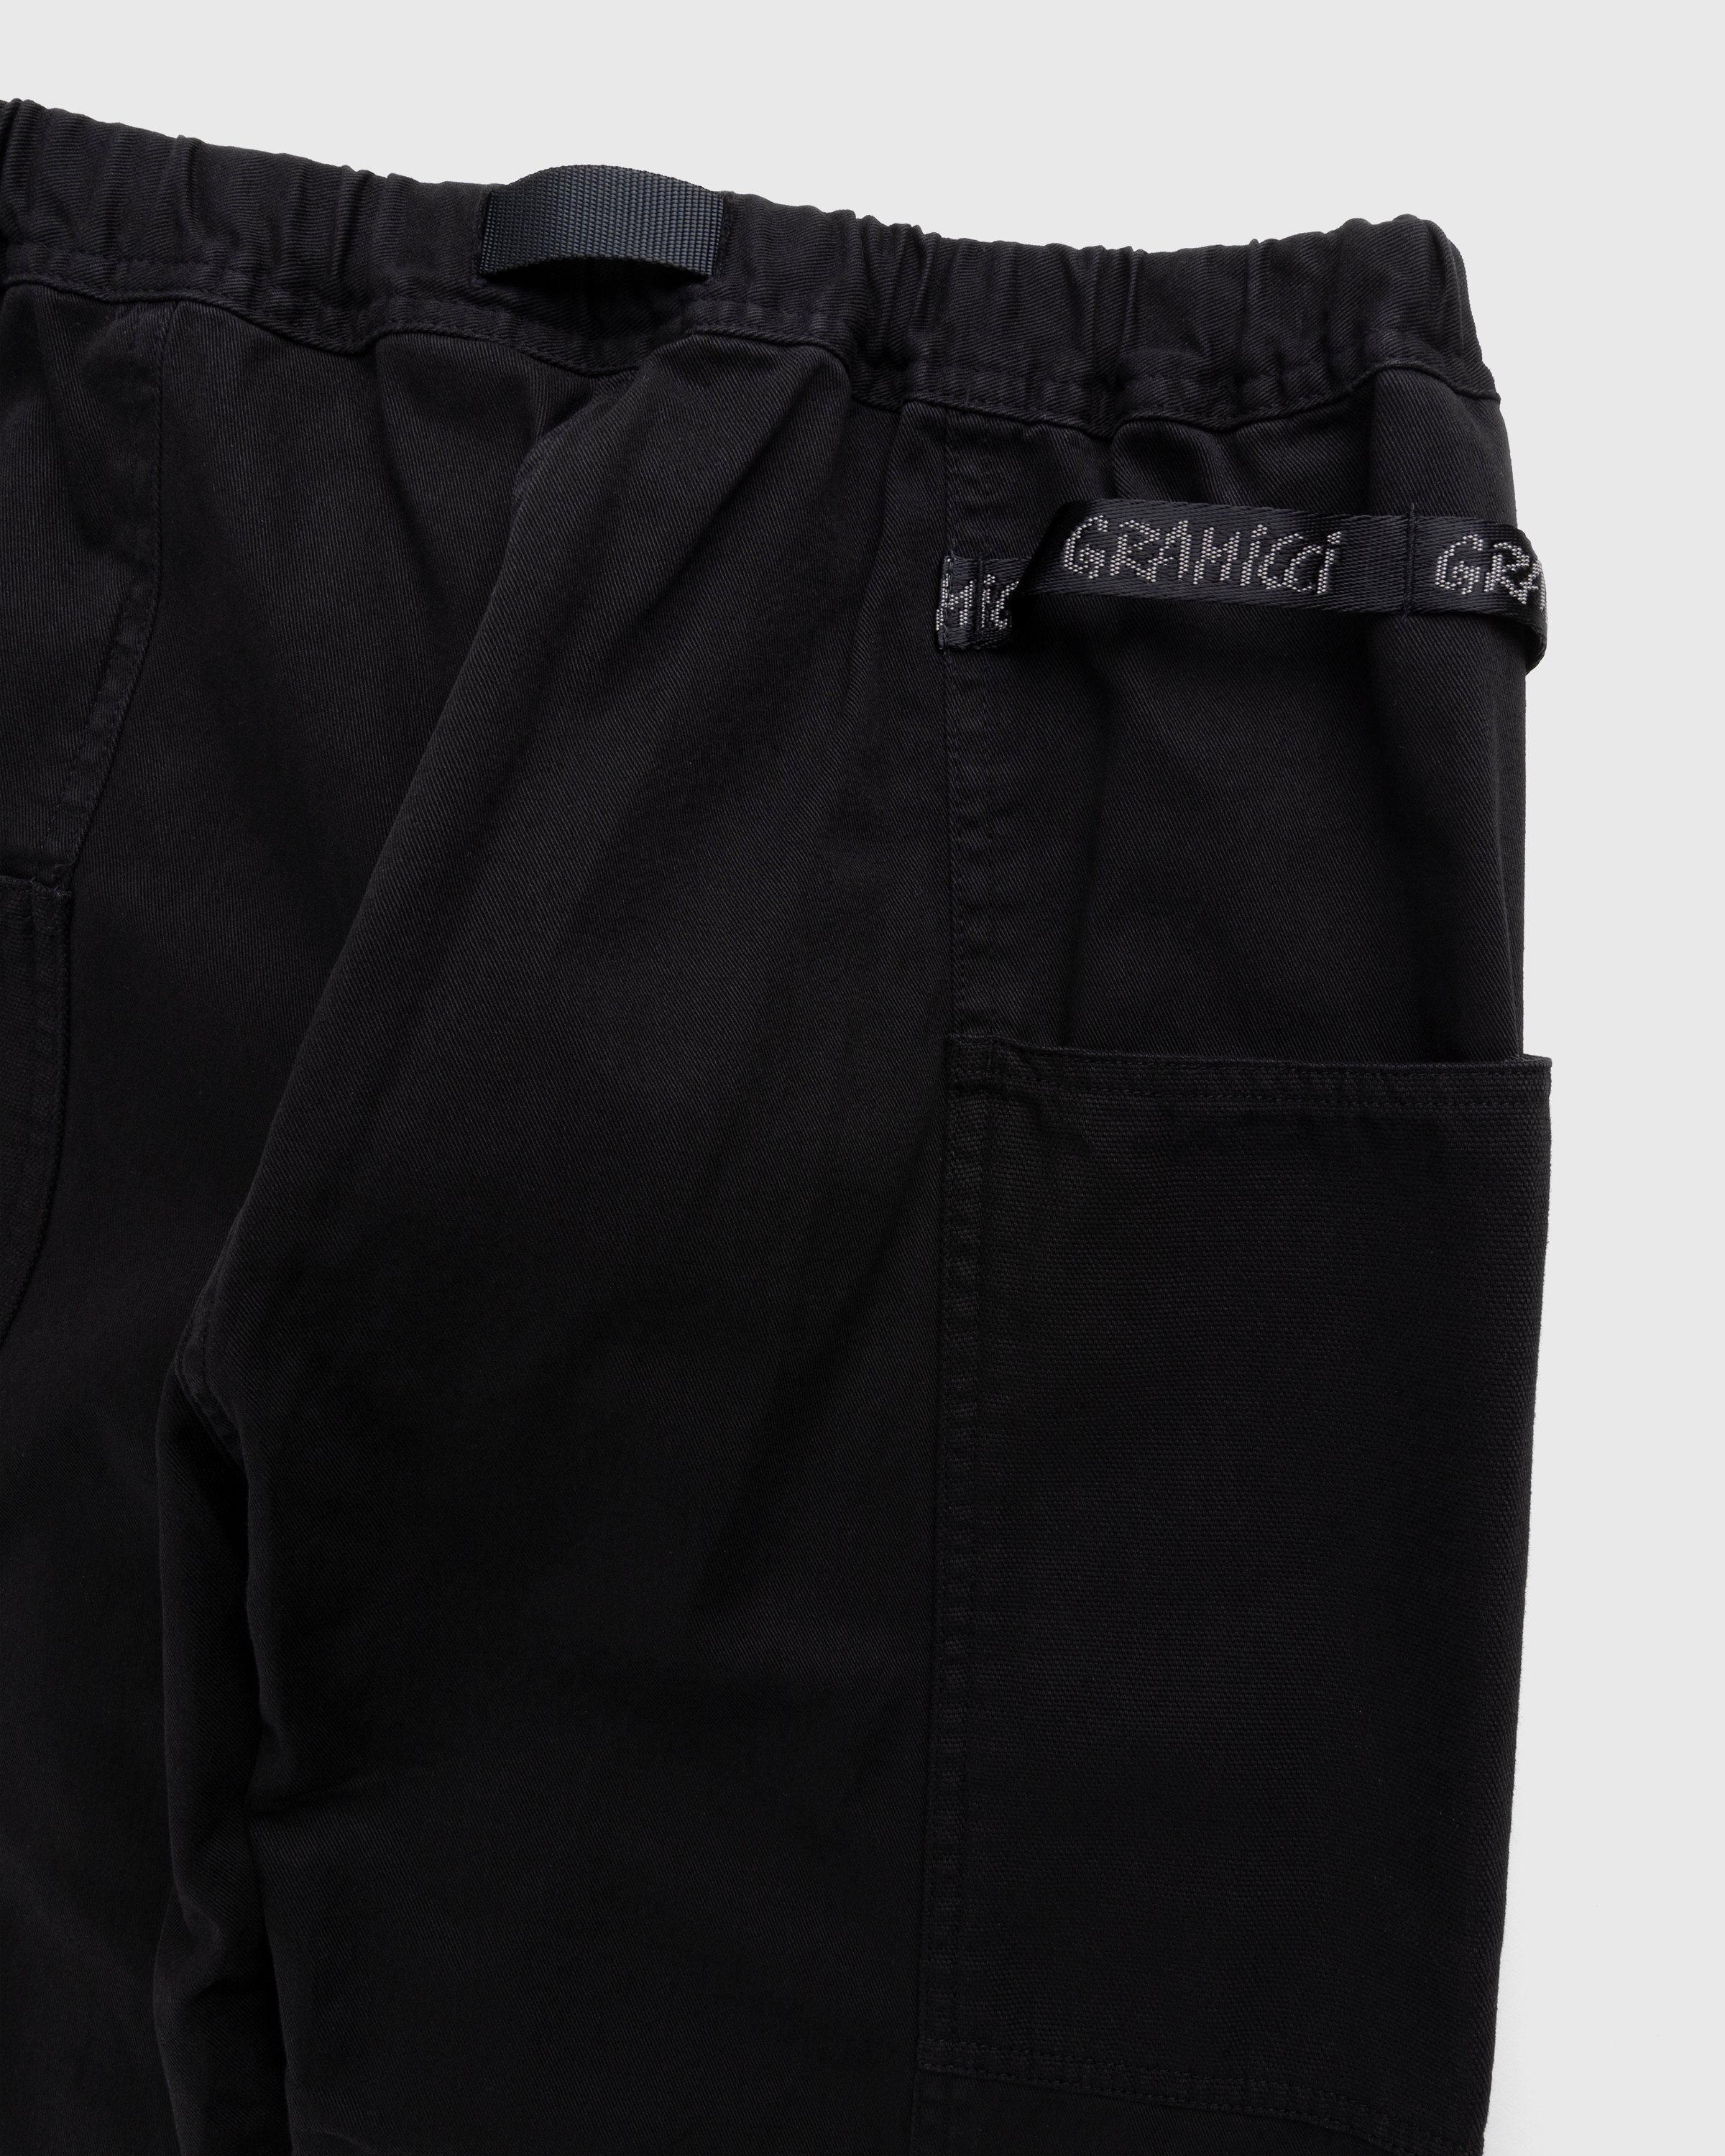 Gramicci - Gadget Pant Black - Clothing - Black - Image 3